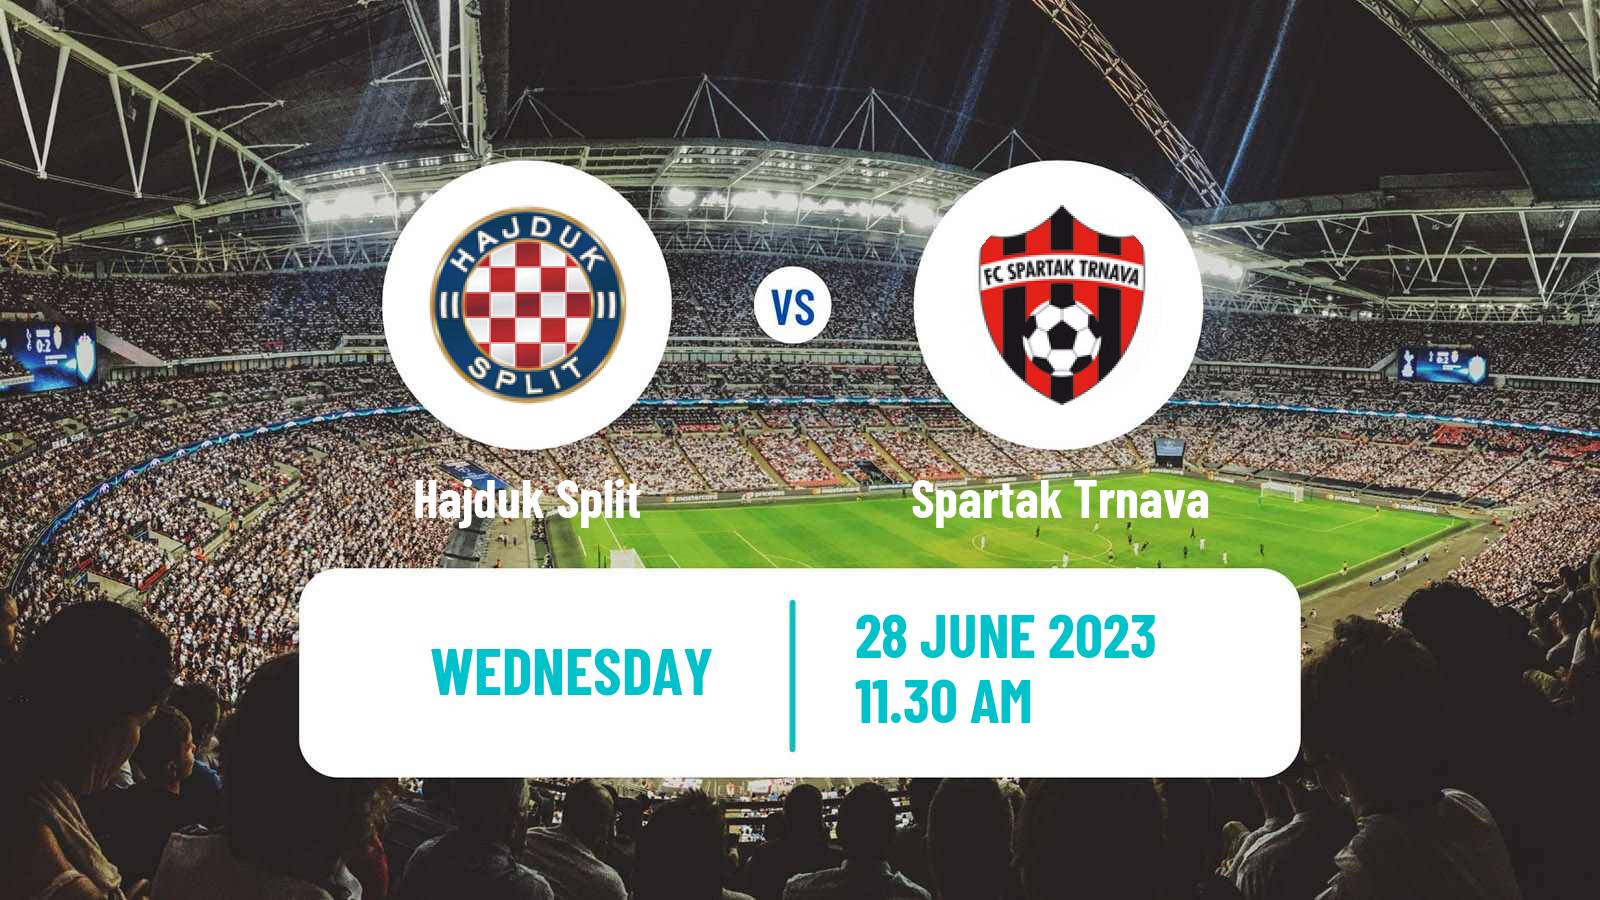 Soccer Club Friendly Hajduk Split - Spartak Trnava